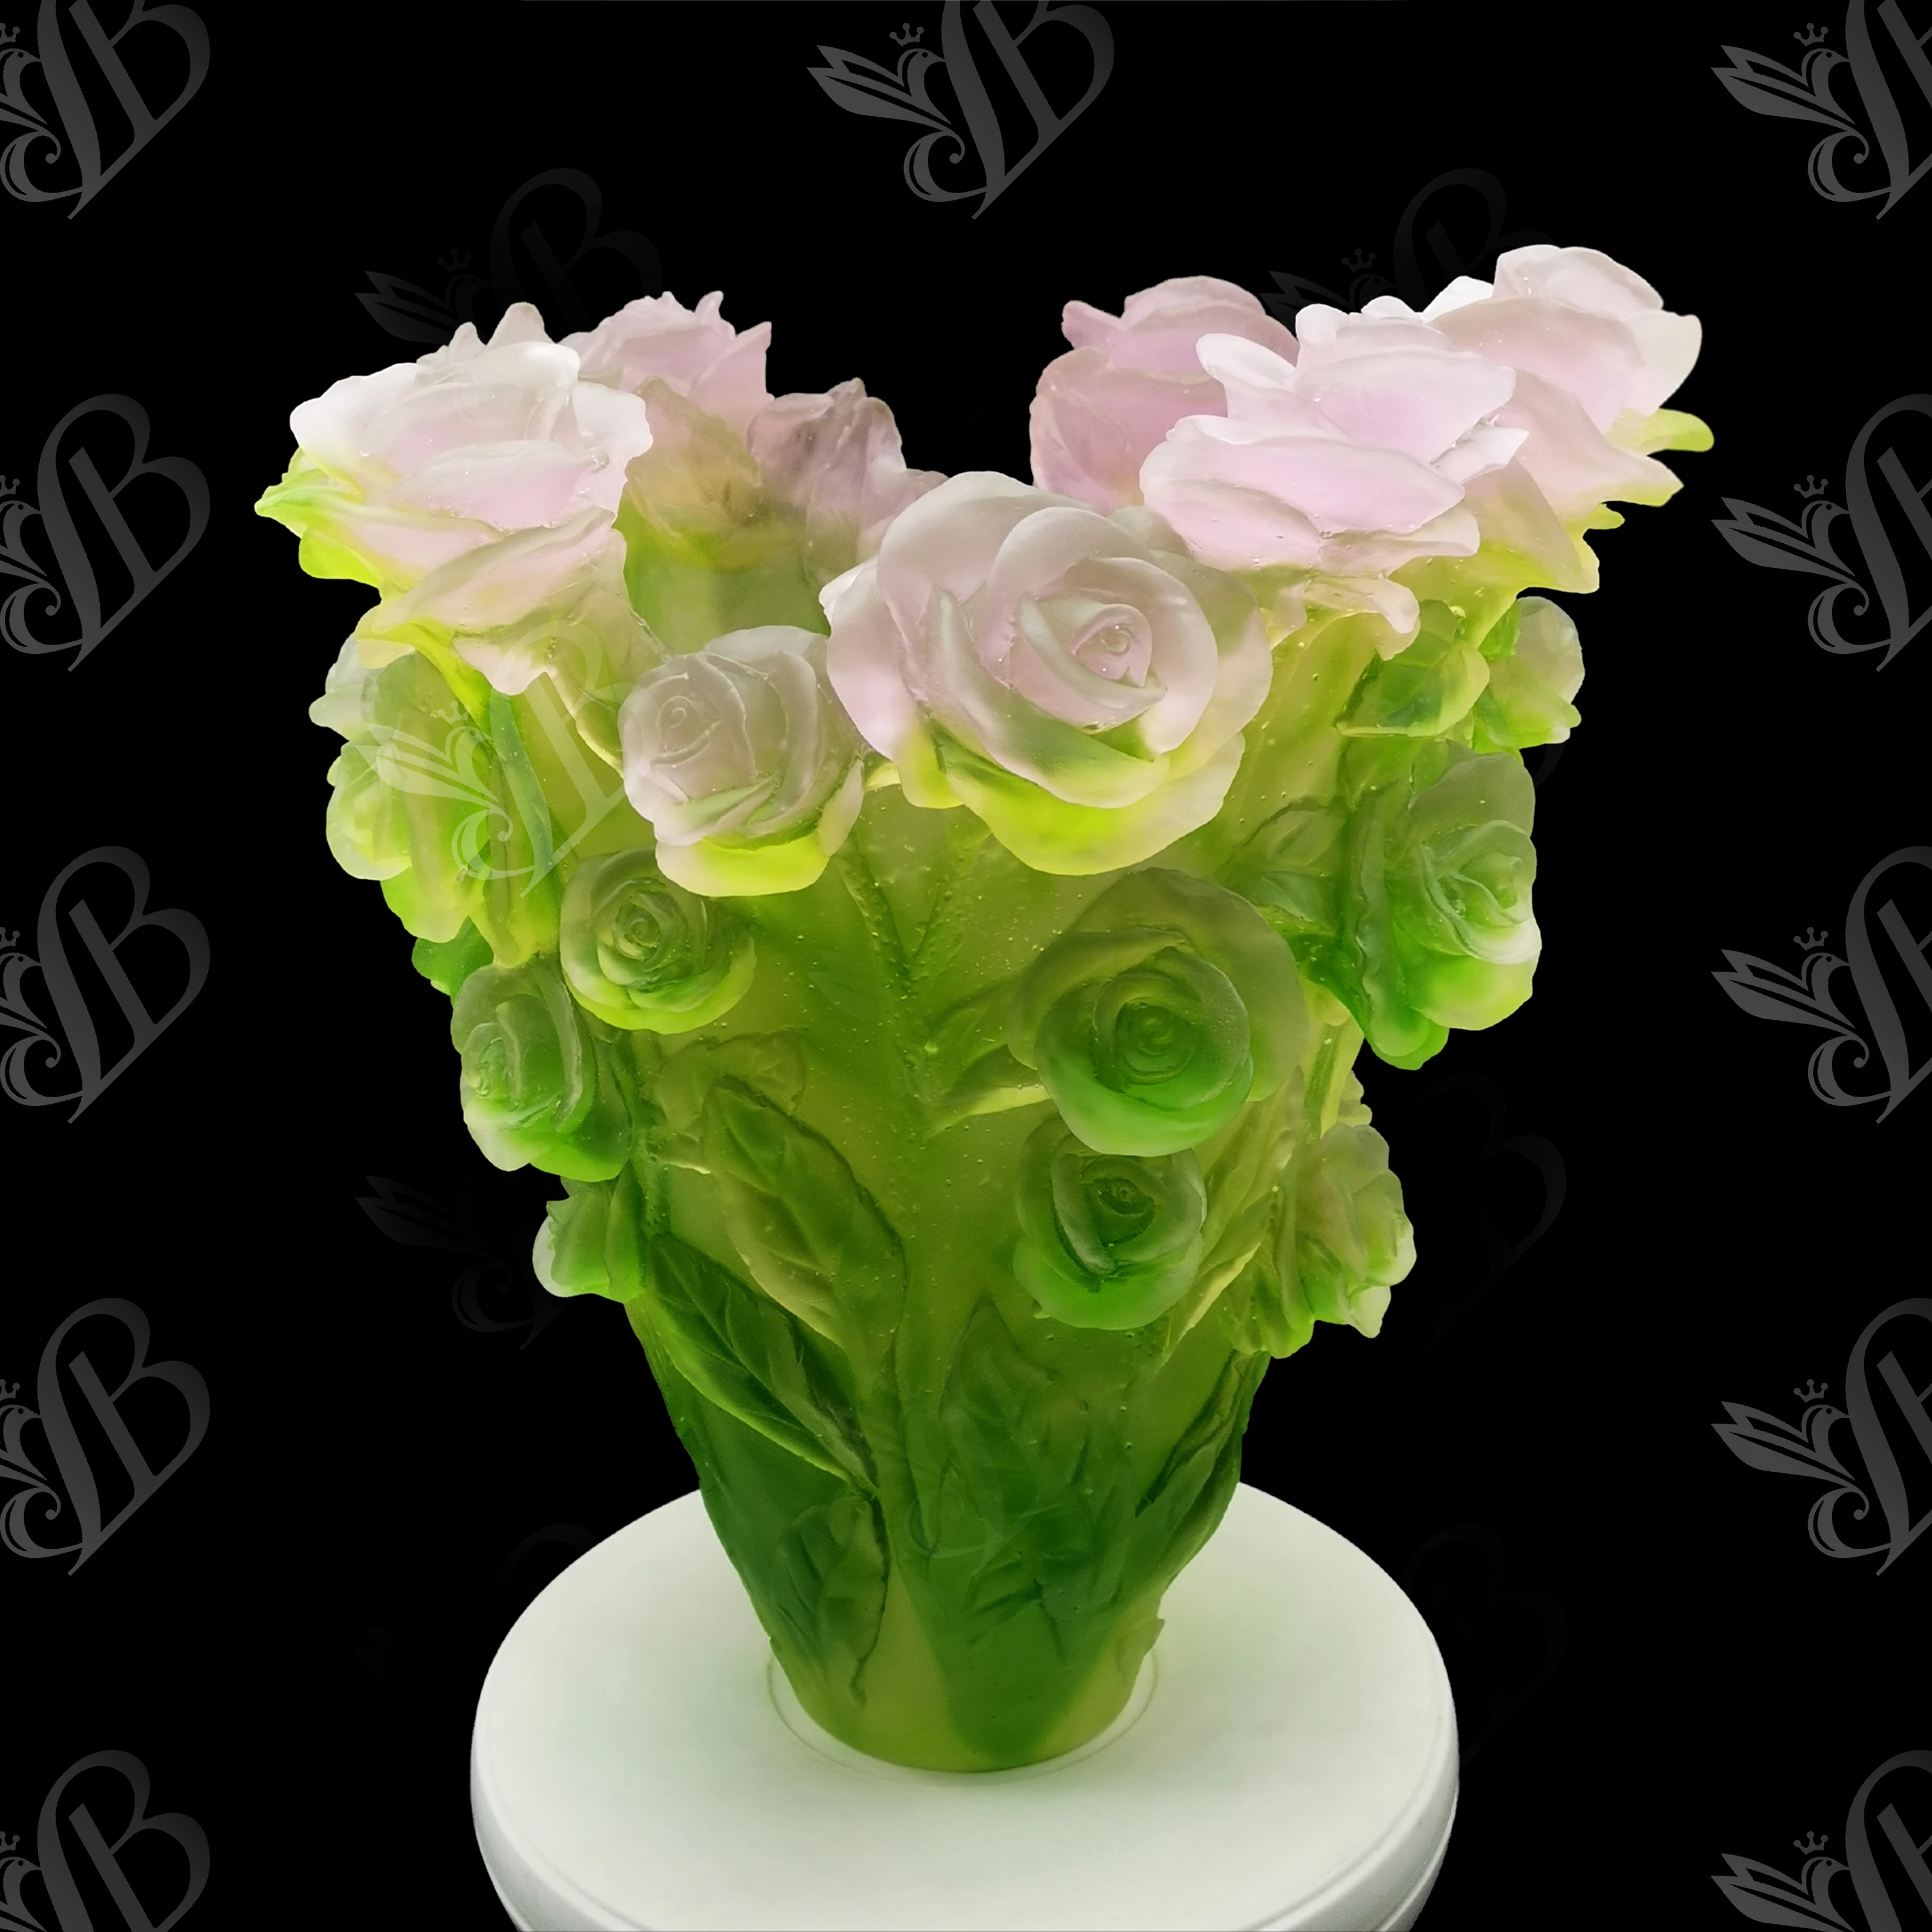 
latest European style high grade crystal rose vase 